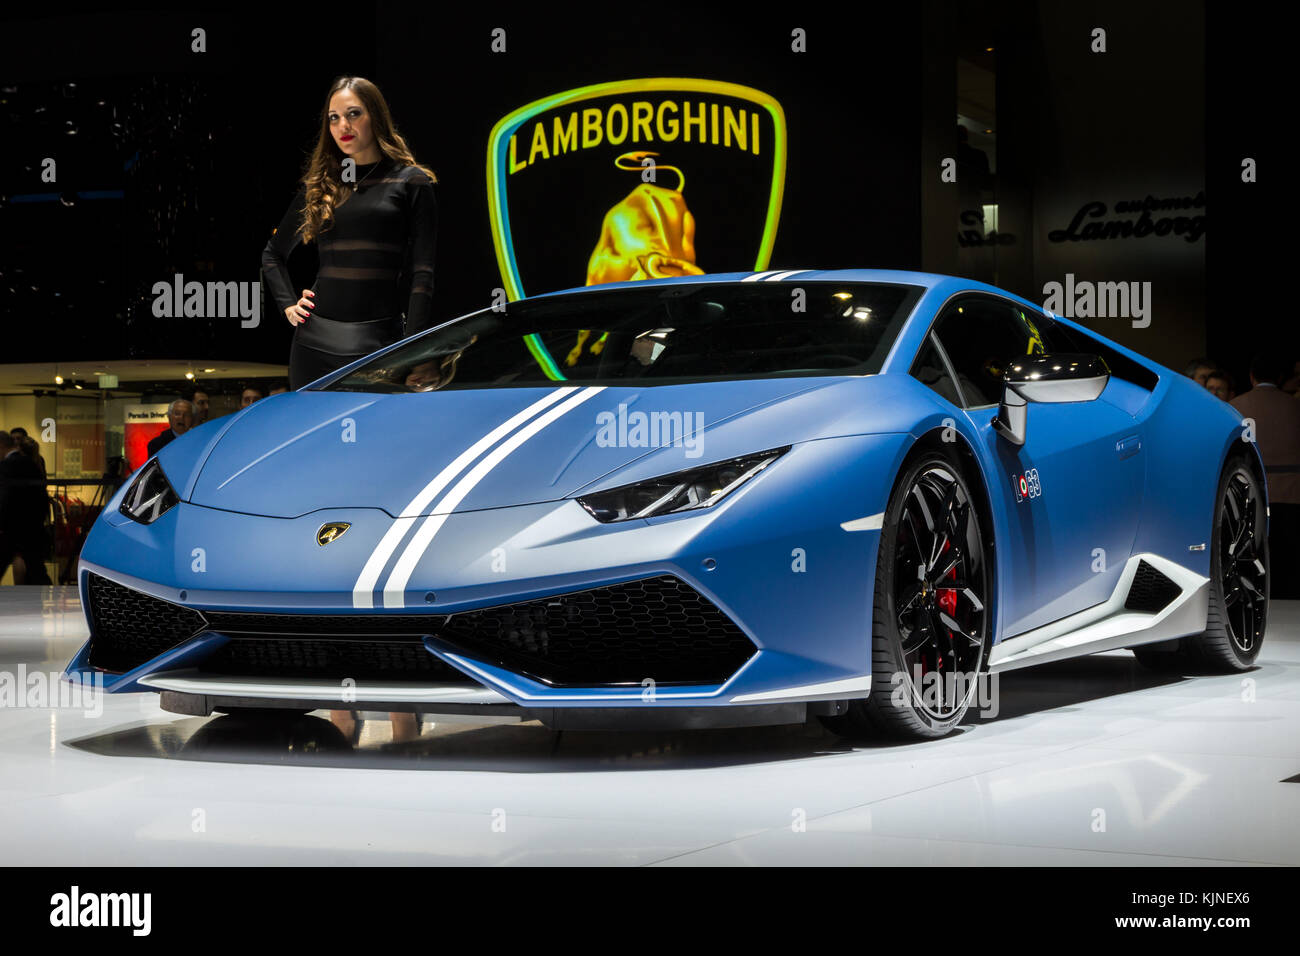 GENEVA, SWITZERLAND - MARCH 1, 2016: New Lamborghini Huracan Avio LP 610-4 sports car showcased at the 86th Geneva International Motor Show. Stock Photo